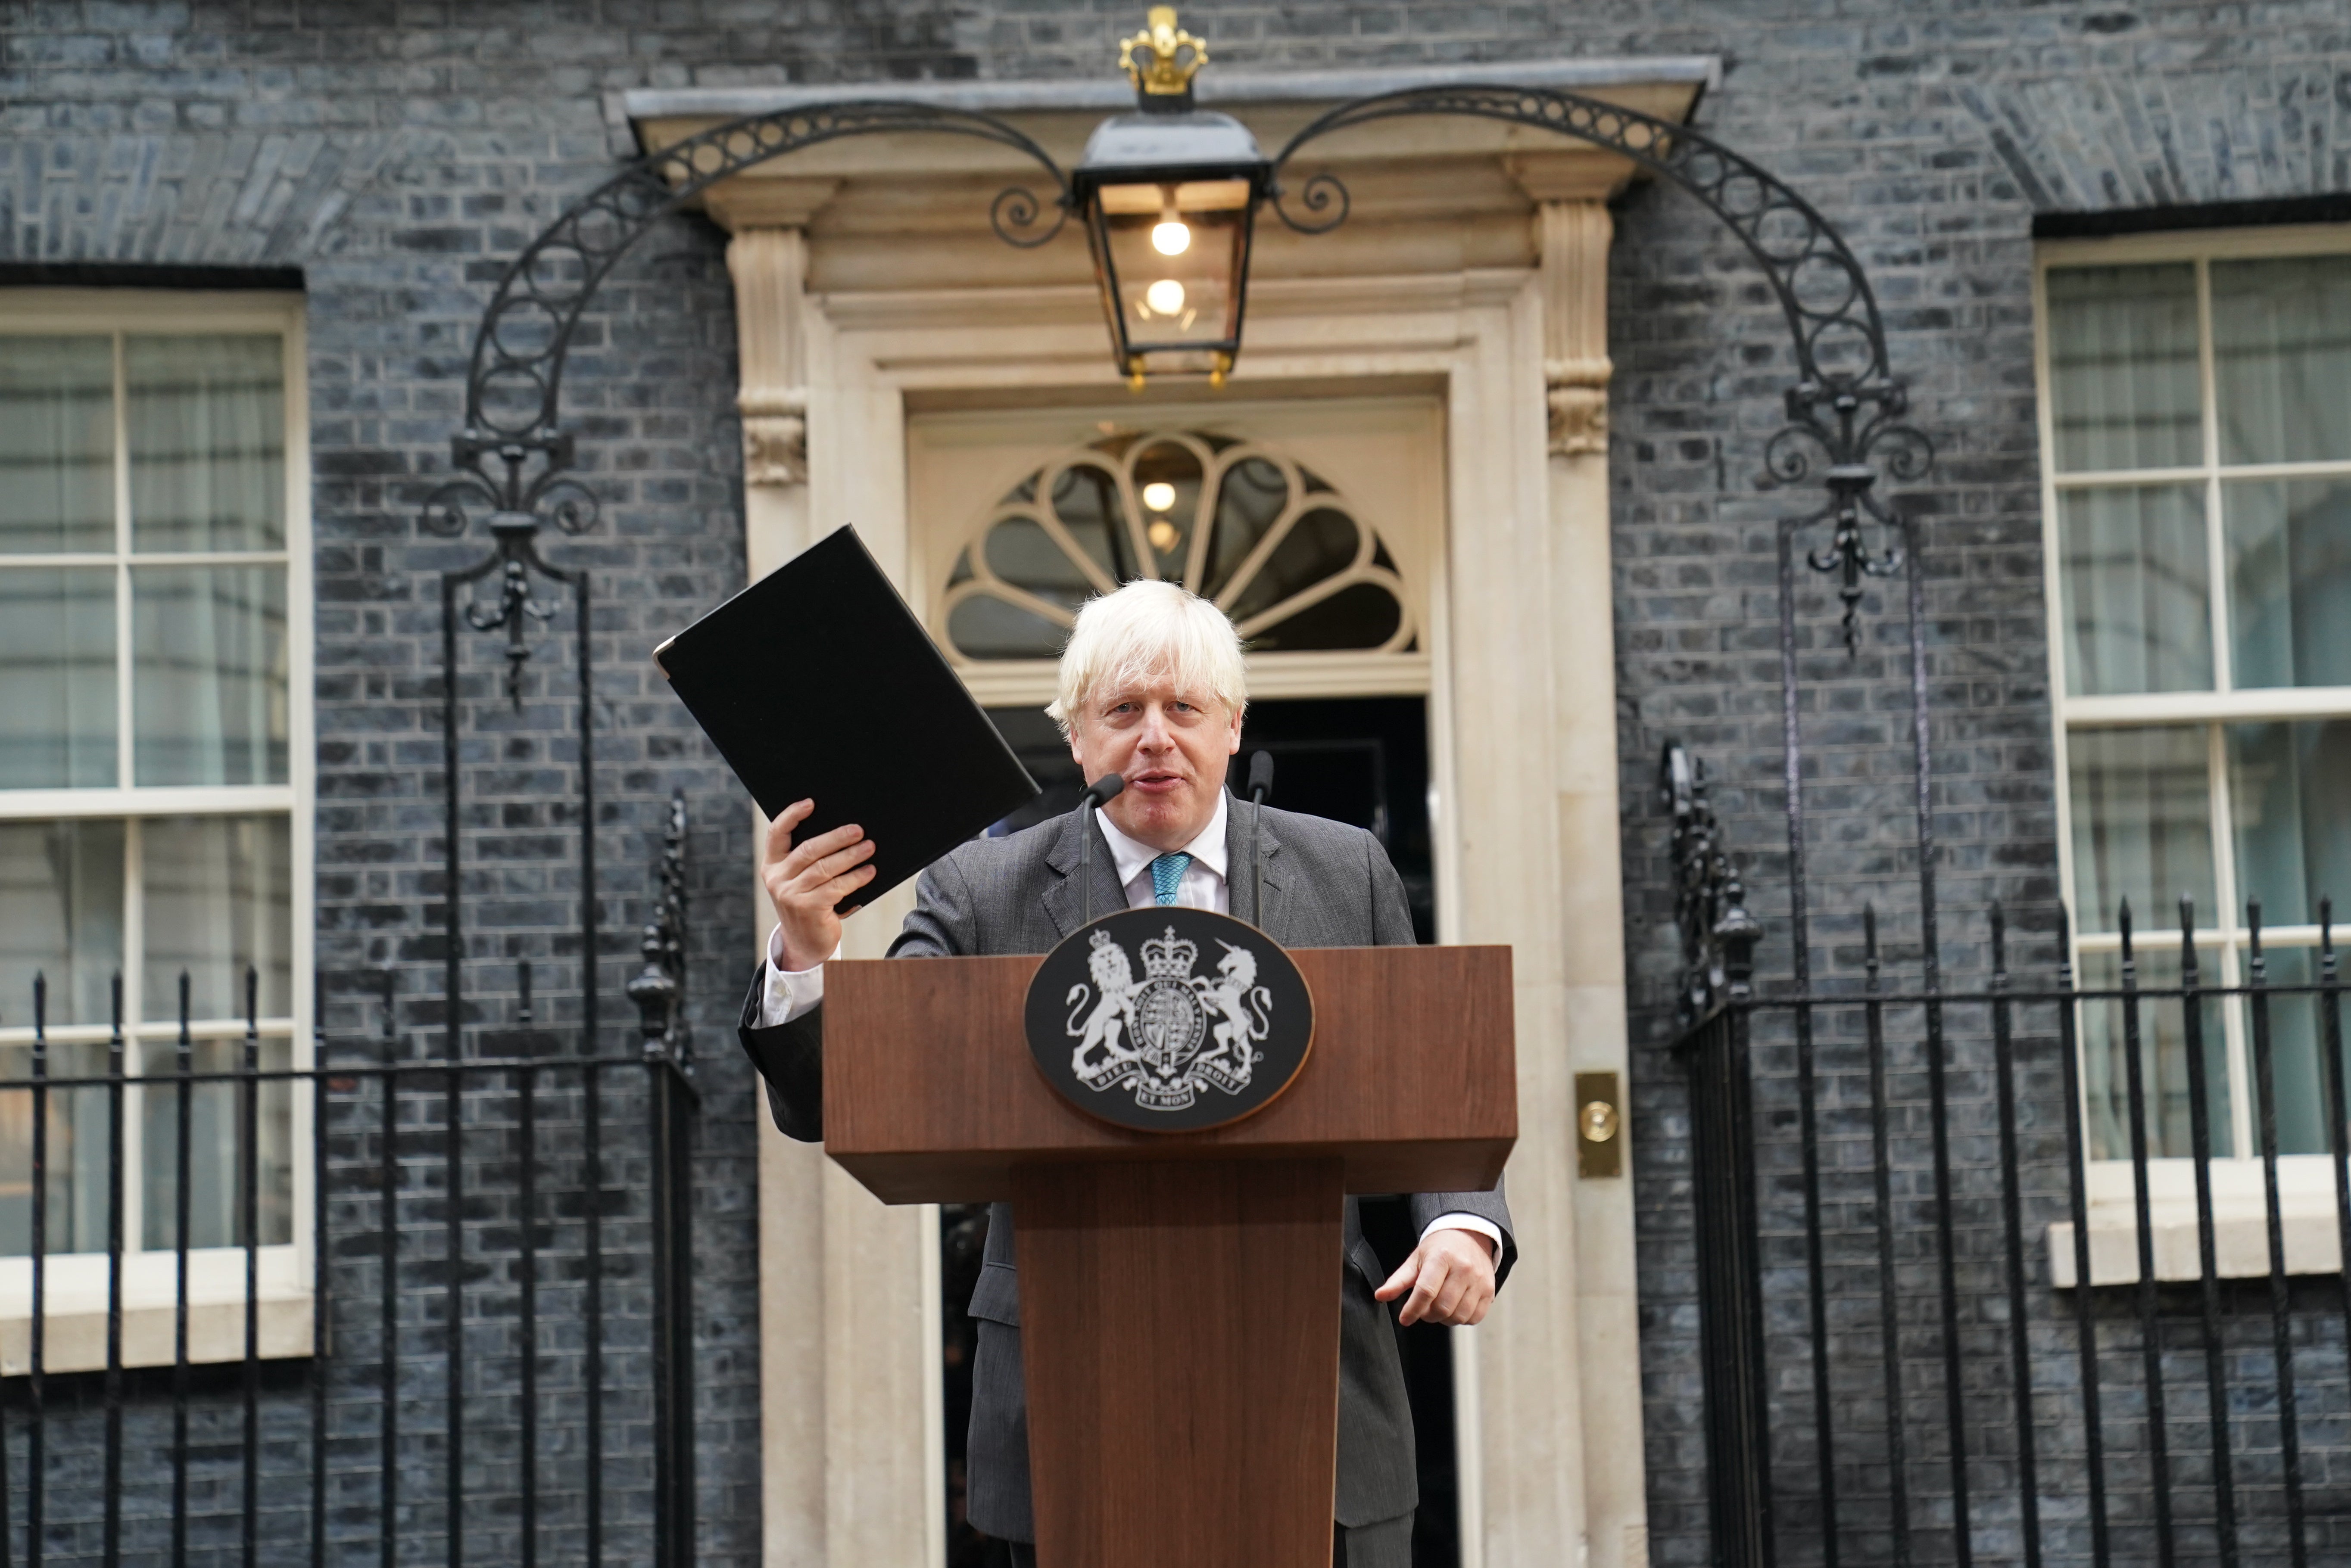 Former prime minister Boris Johnson left after multiple scandals regarding parties during lockdown